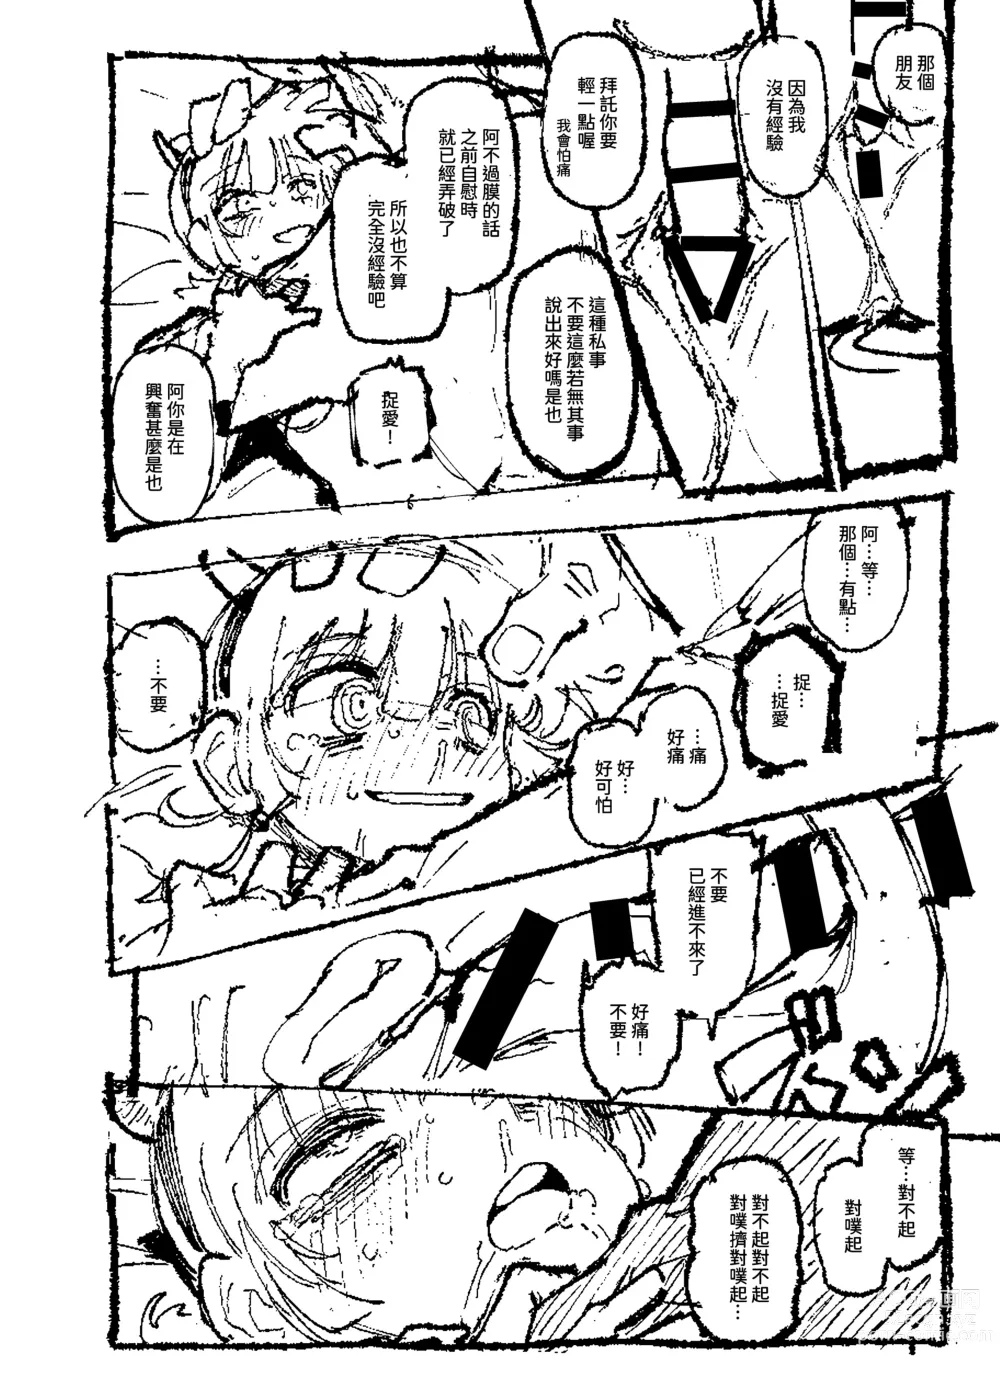 Page 23 of doujinshi 家裡過於潮濕長出致幻蘑菇意外誤食後發情的那些事